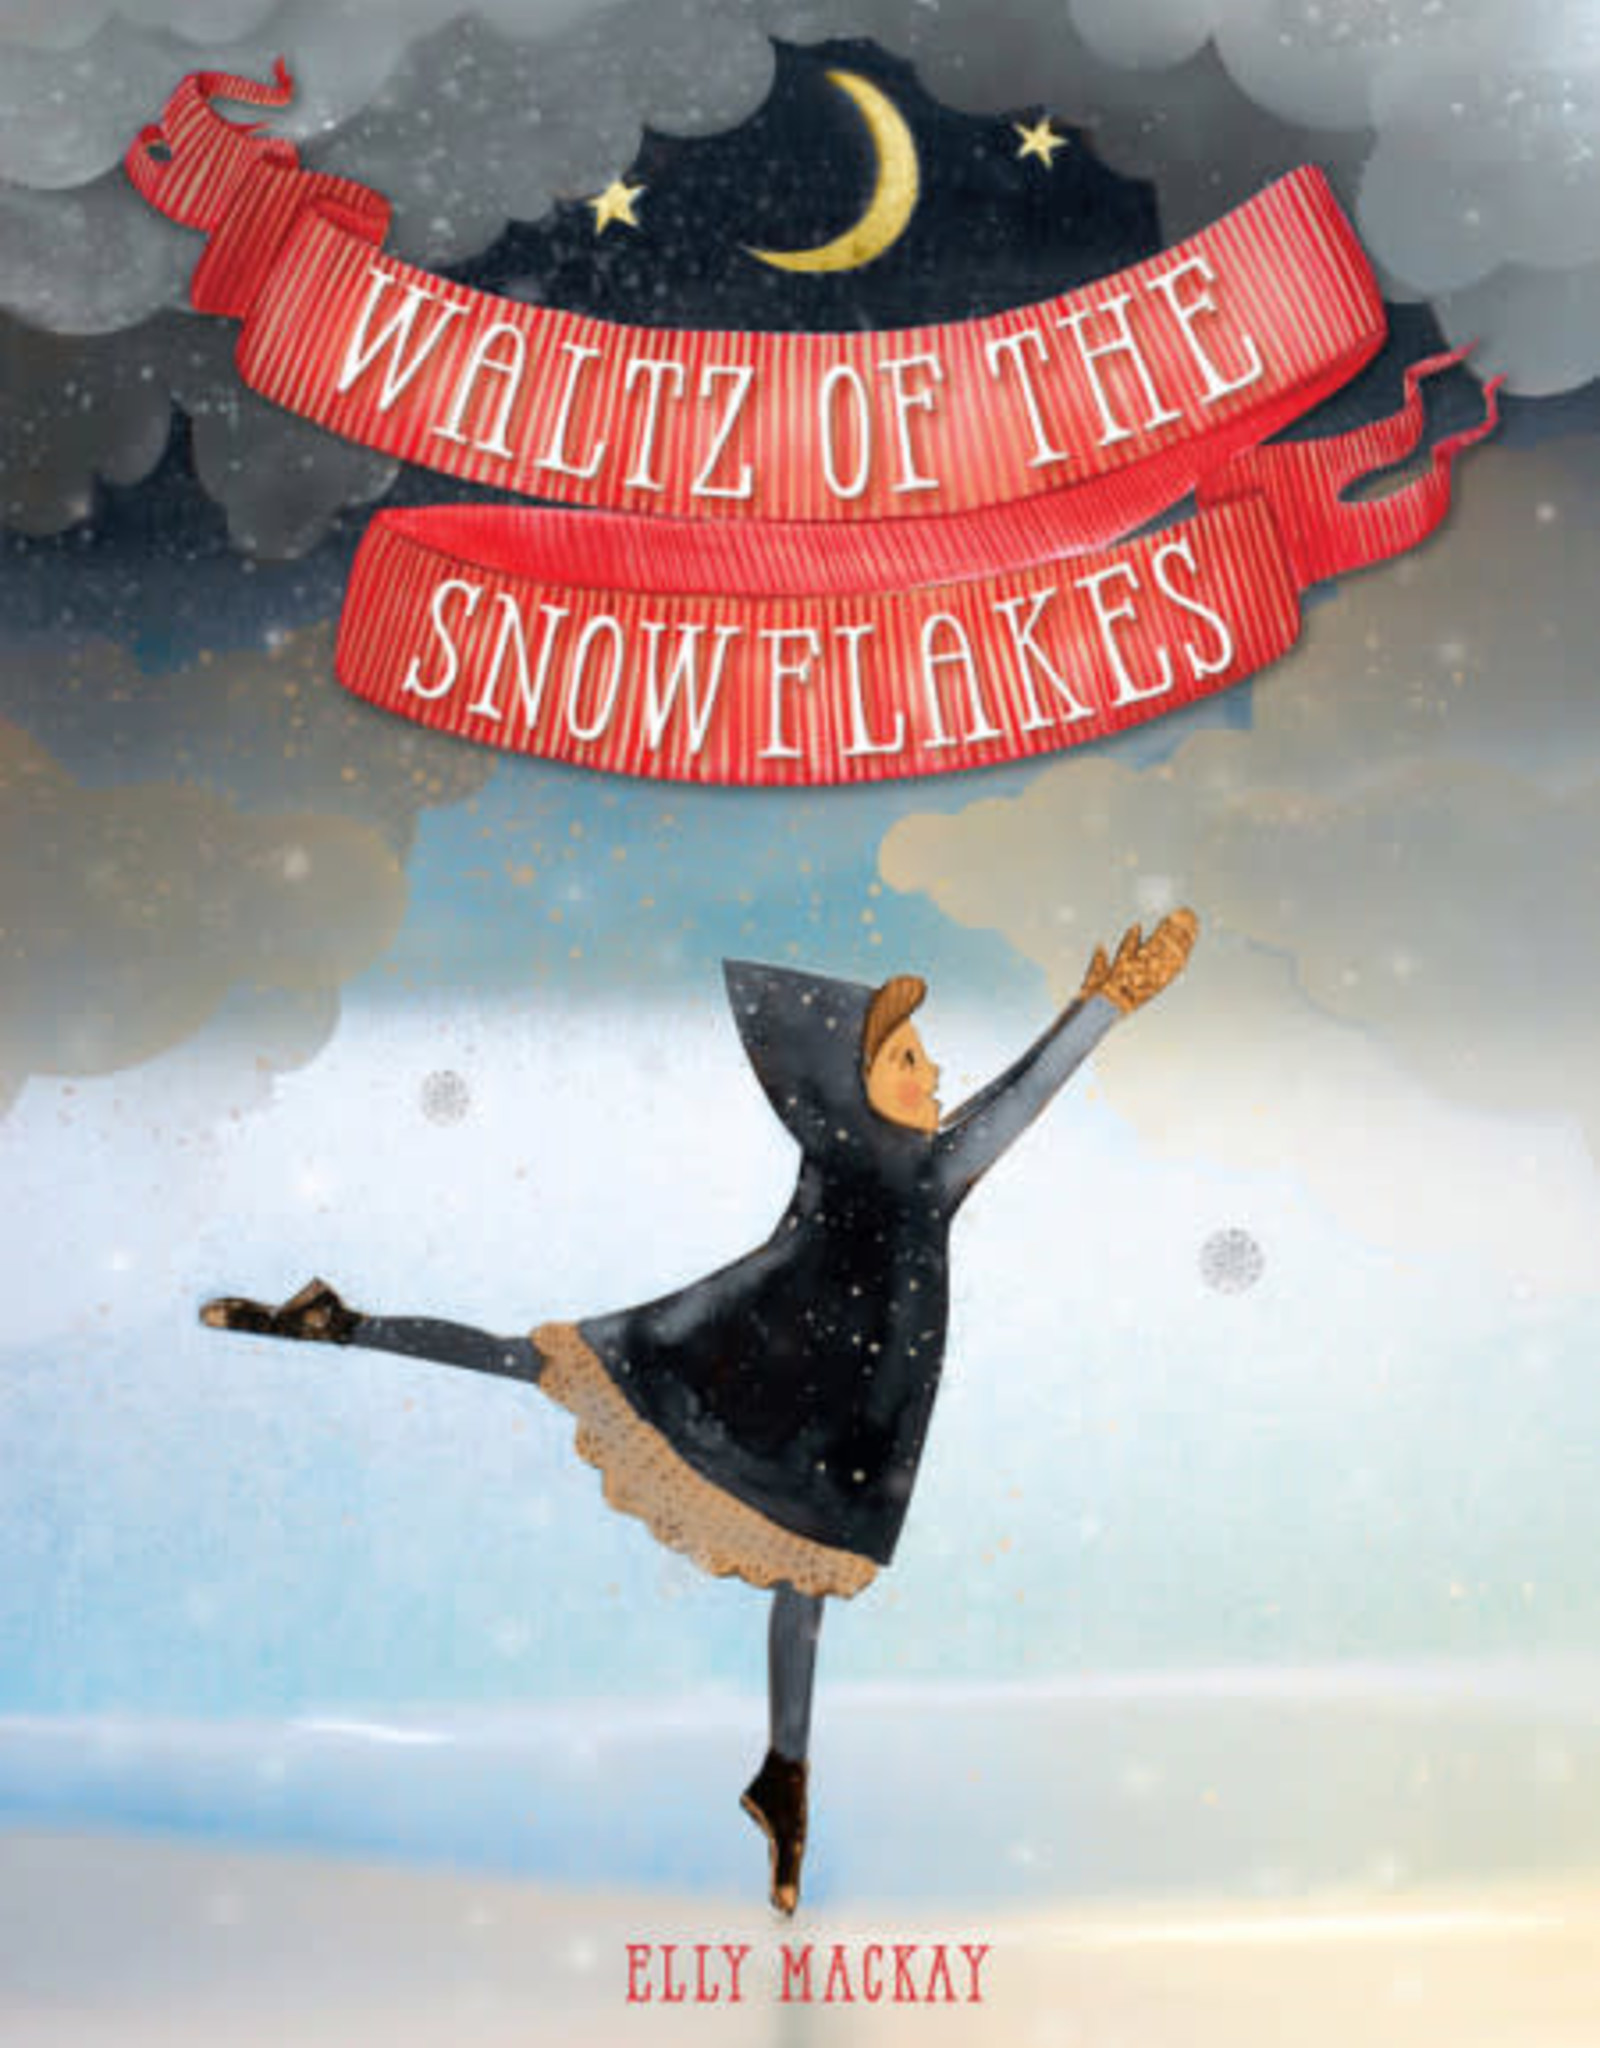 Hachette WALTZ OF THE SNOWFLAKES